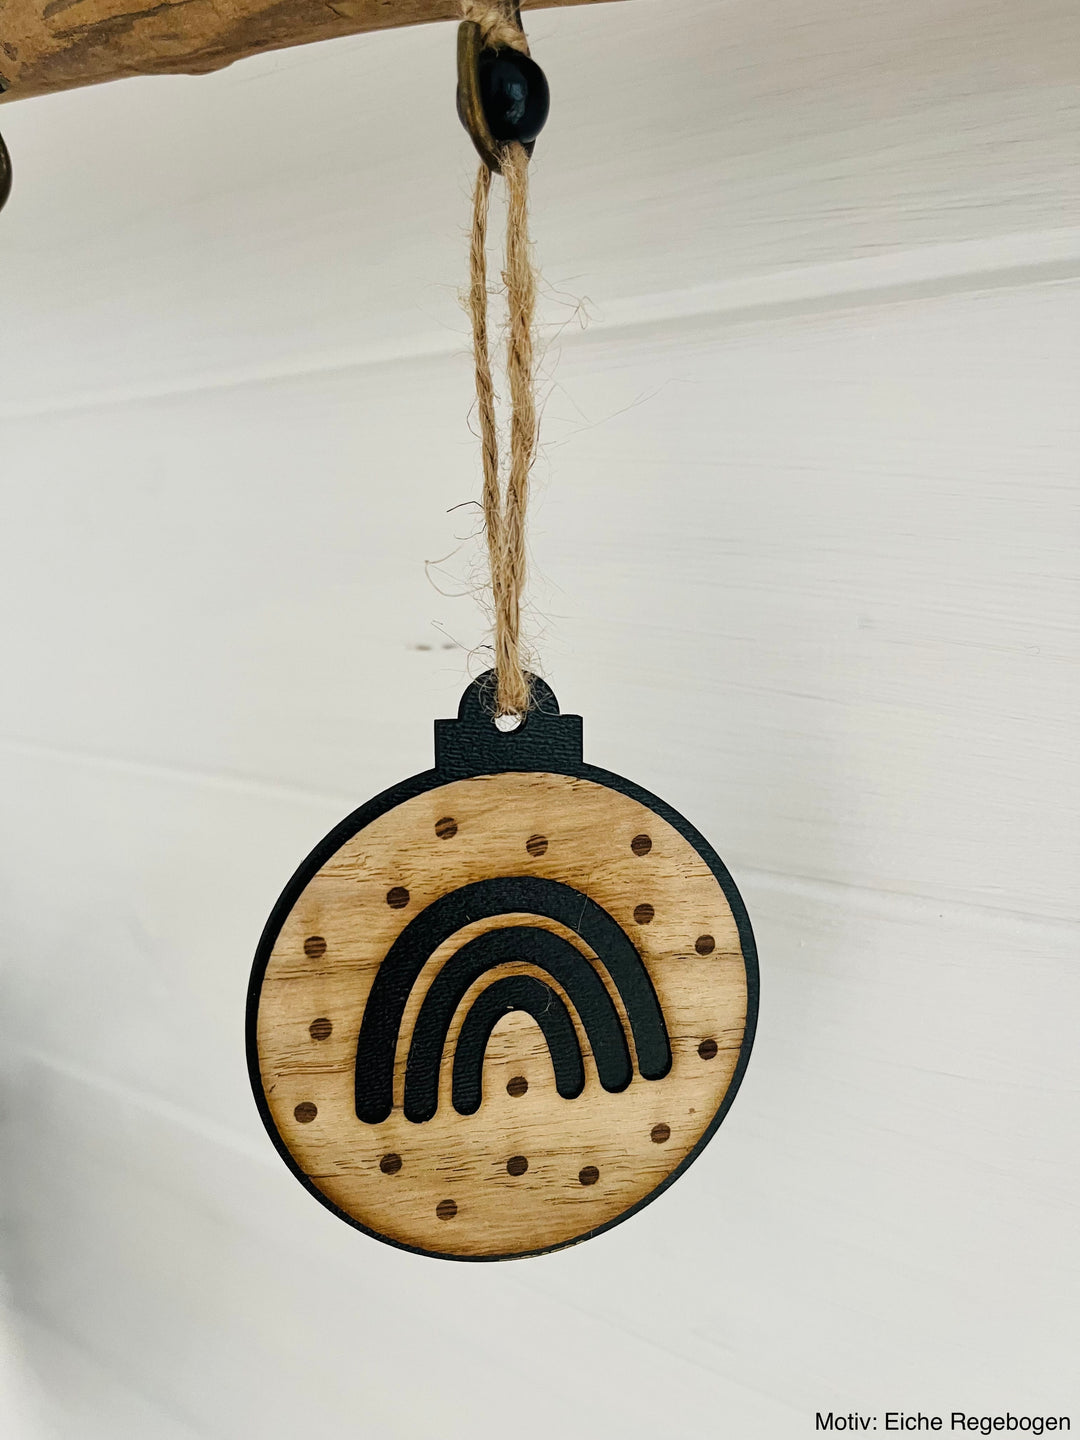 Beautiful wooden pendant with real wood veneer